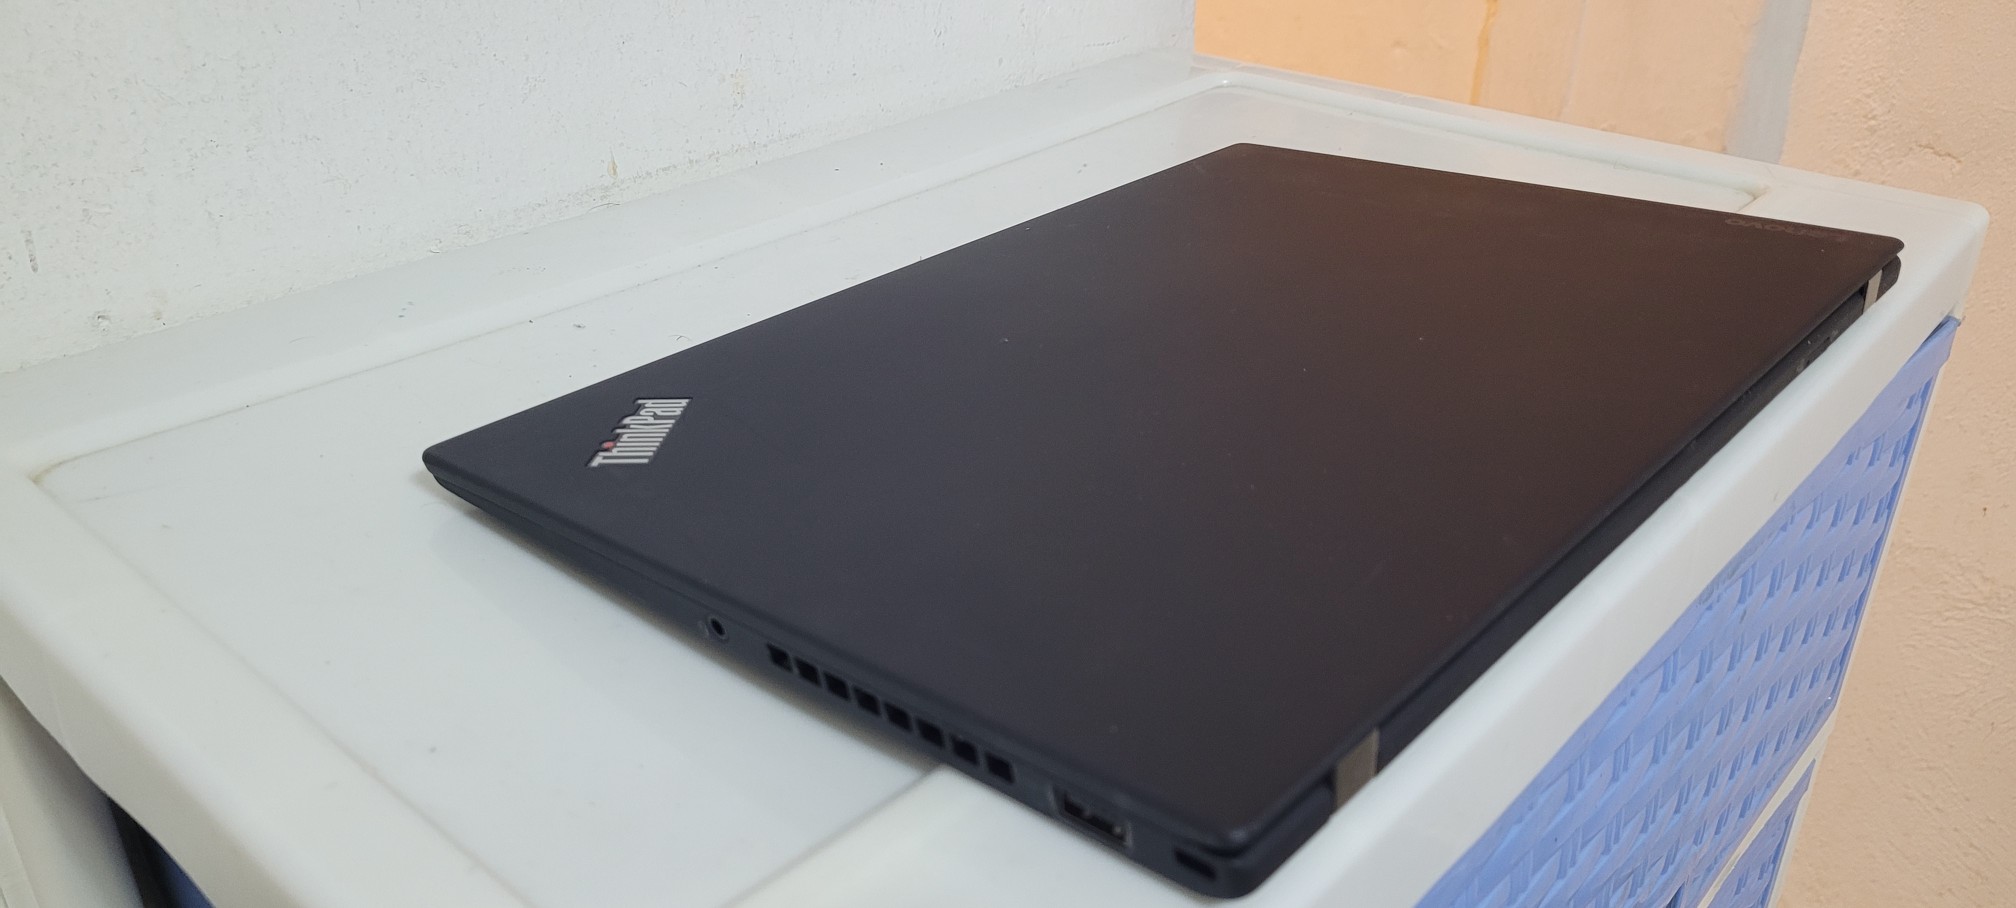 computadoras y laptops - Lenovo x1 Slim 14 Pulg Core i7 7ma Gen Ram 16gb Disco 512gb SSD VIDEO 8GB 2